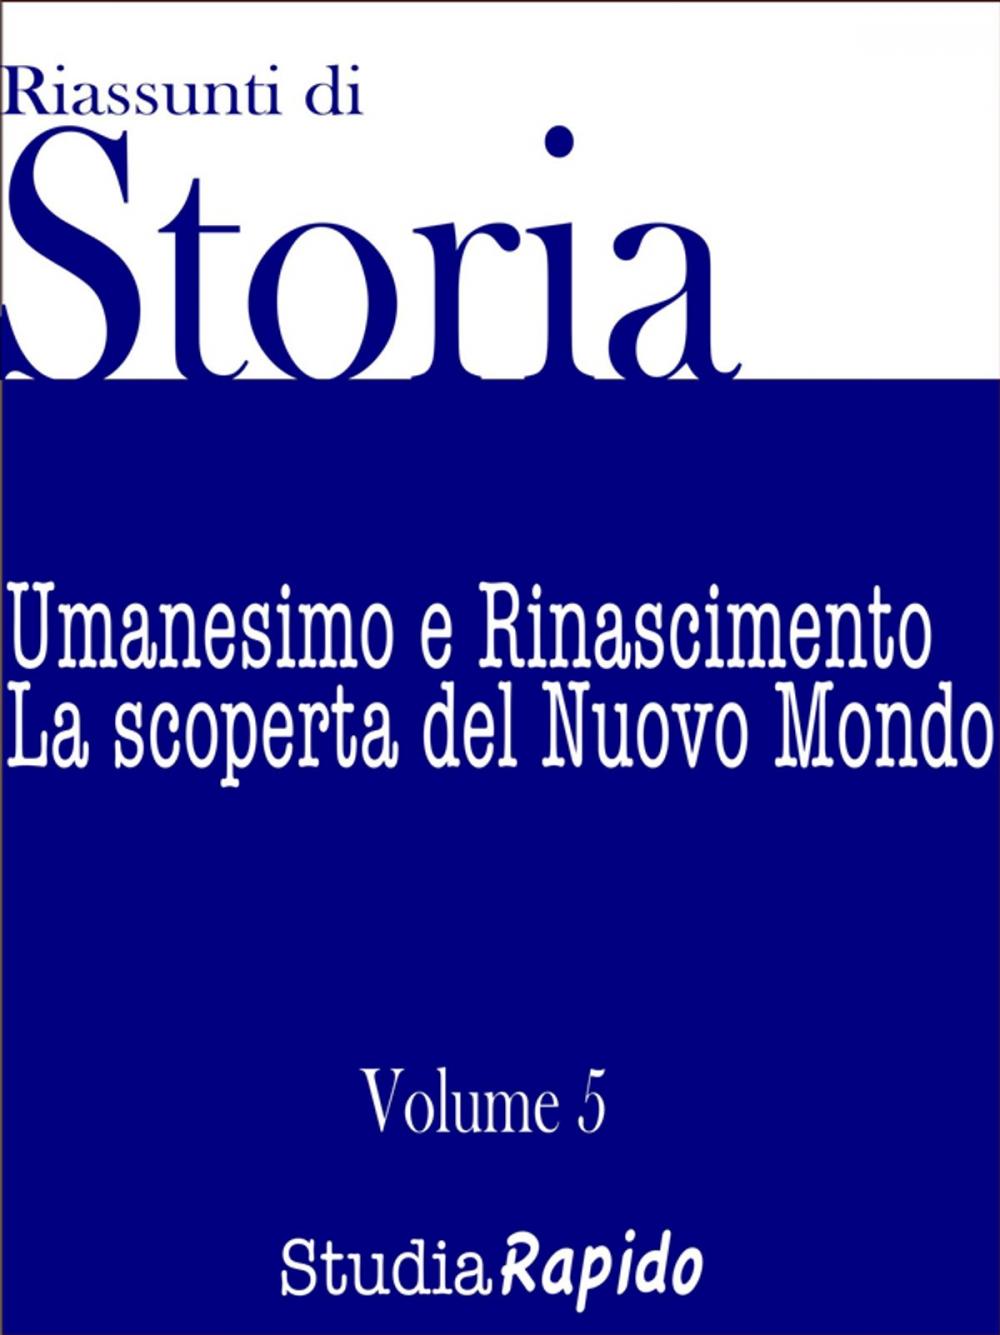 Big bigCover of Riassunti di Storia - Volume 5